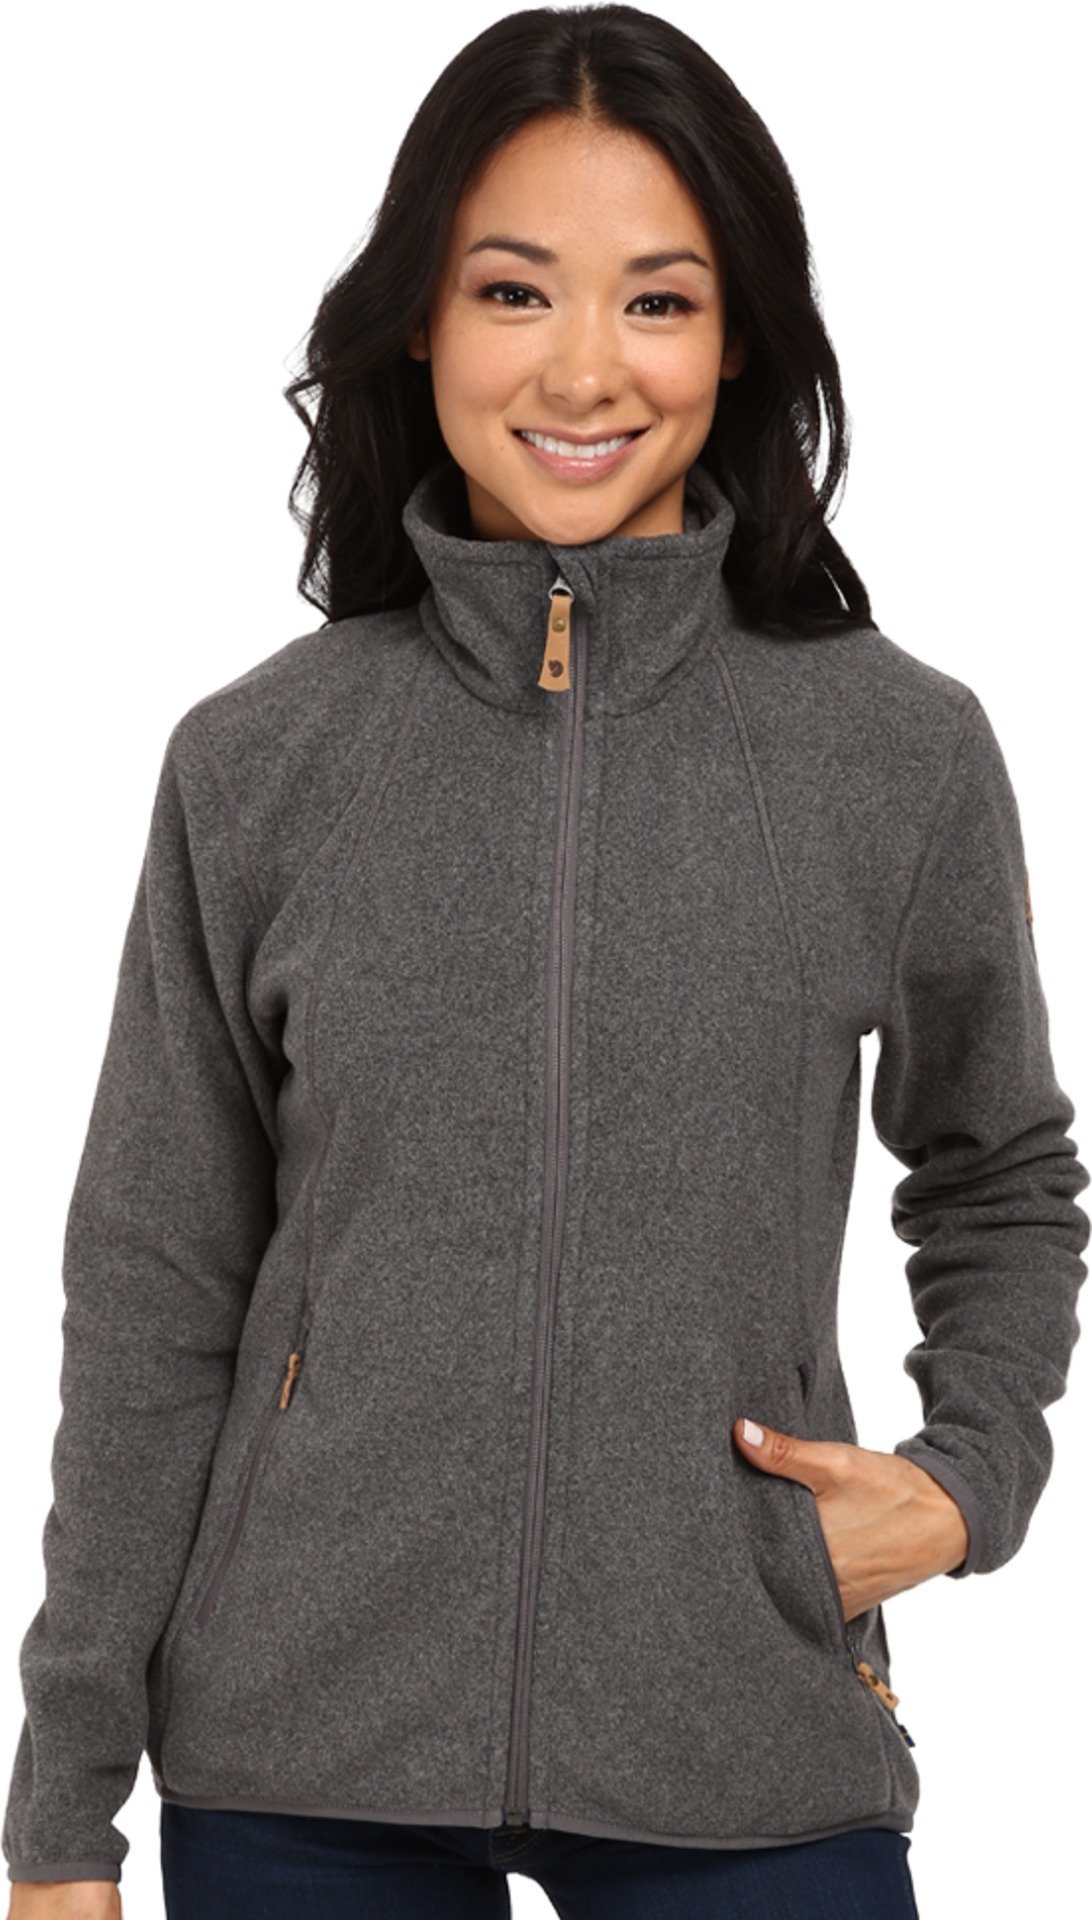 Fjällräven Damen Stina Fleece Sweatshirt,per pack Grau (Dark Grey 030),Small (Herstellergröße:S)